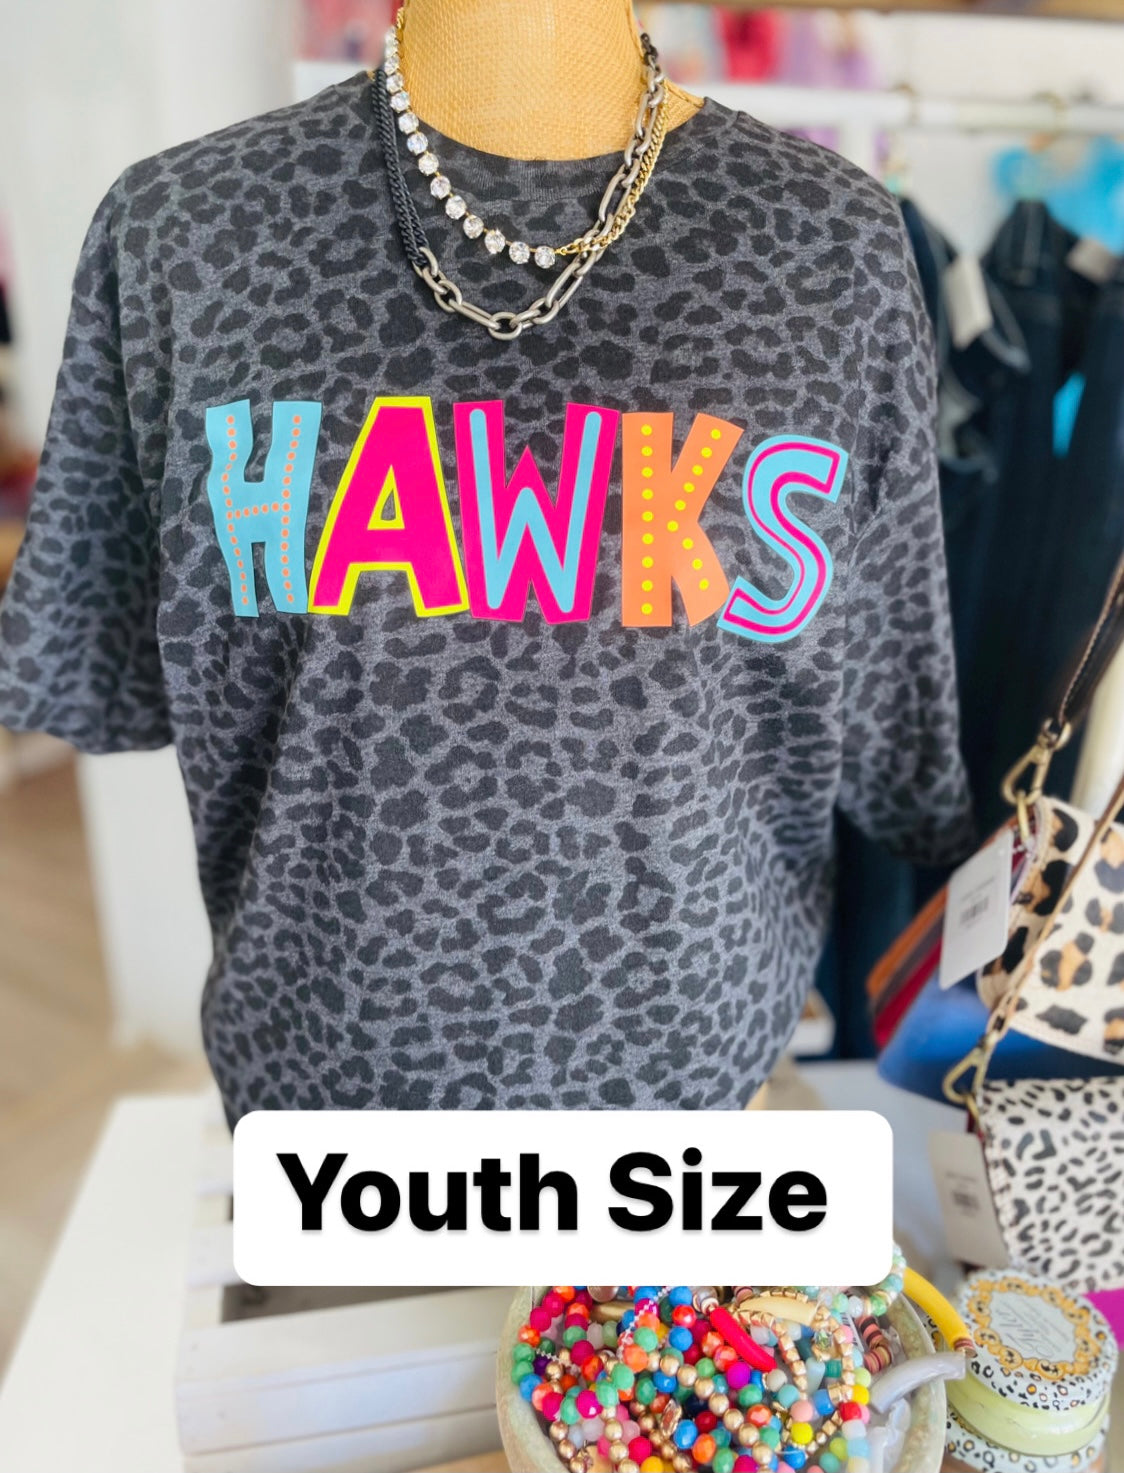 Hawks Pride - Youth